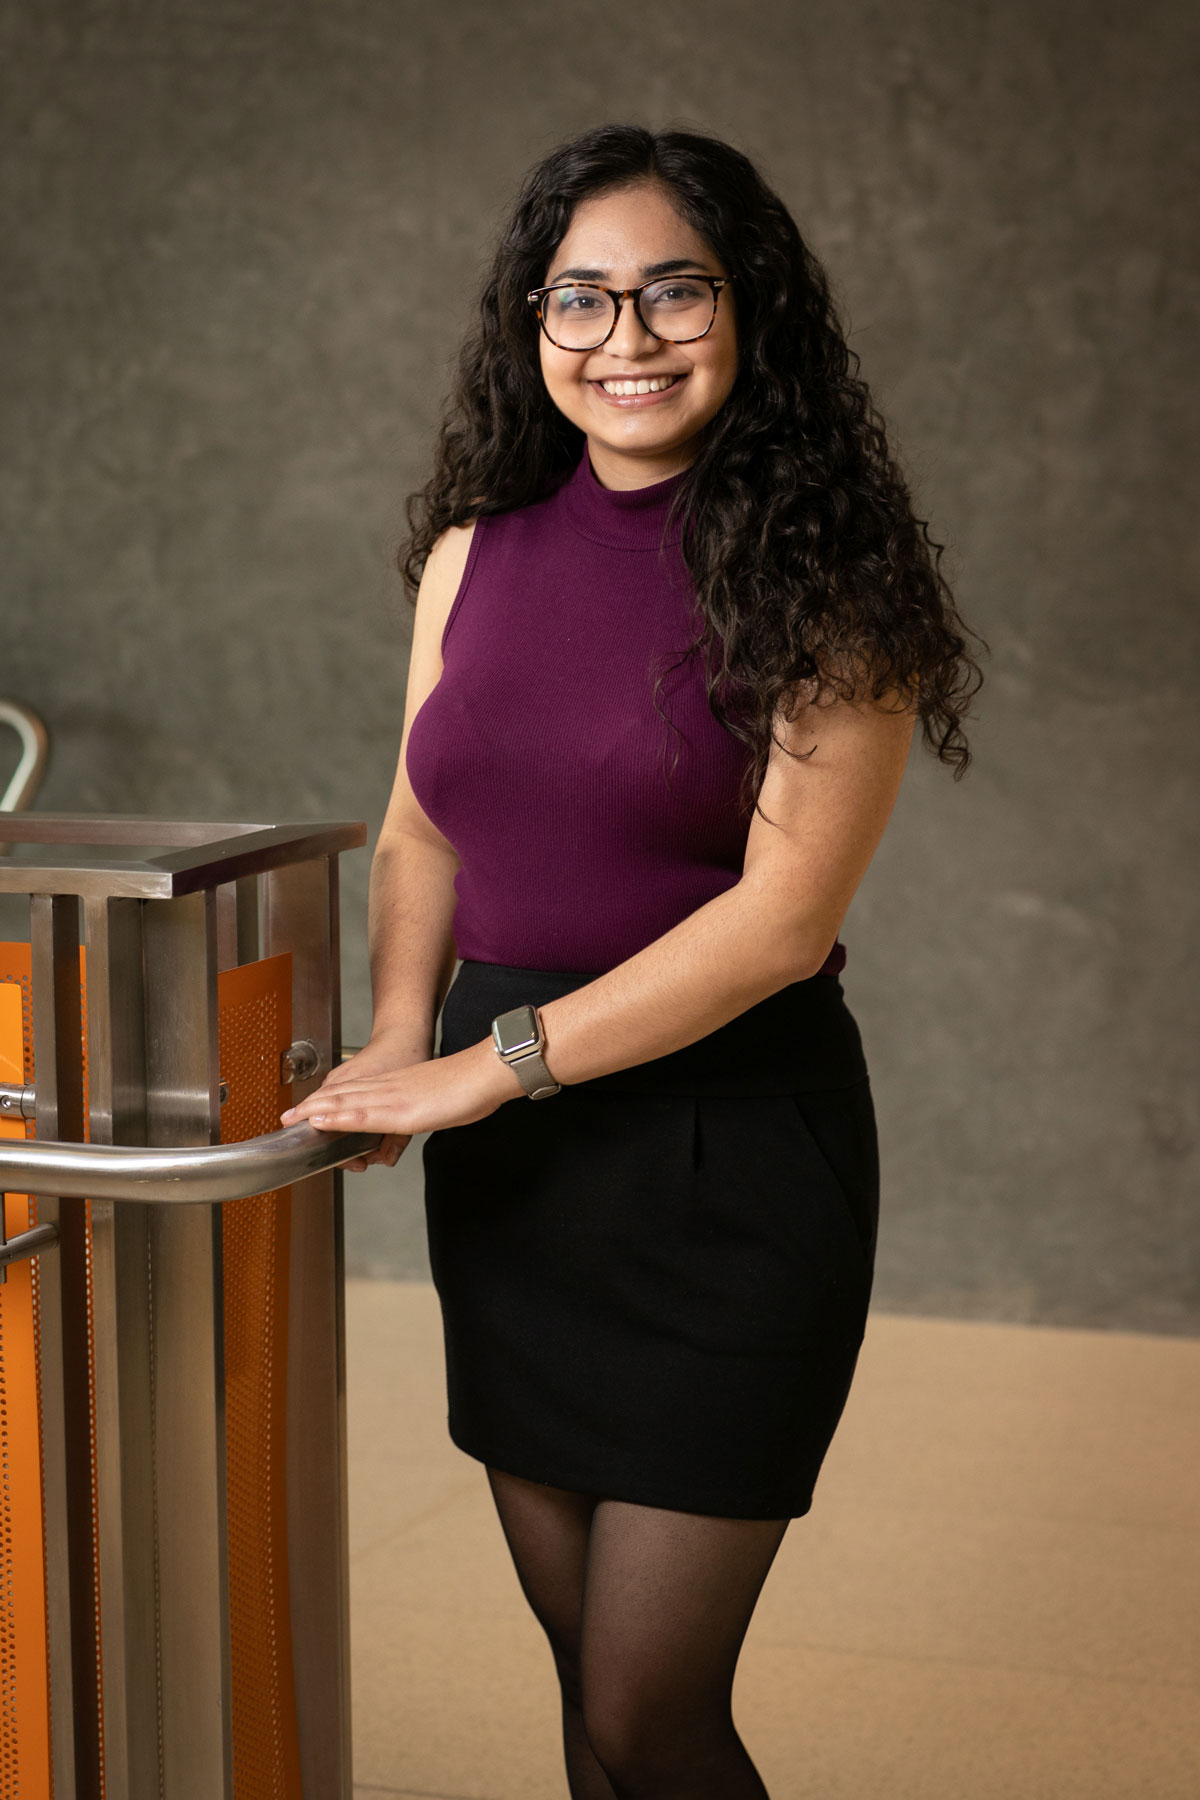 A photo of Jacqueline Avina Espinoza, in a photo studio, smiling